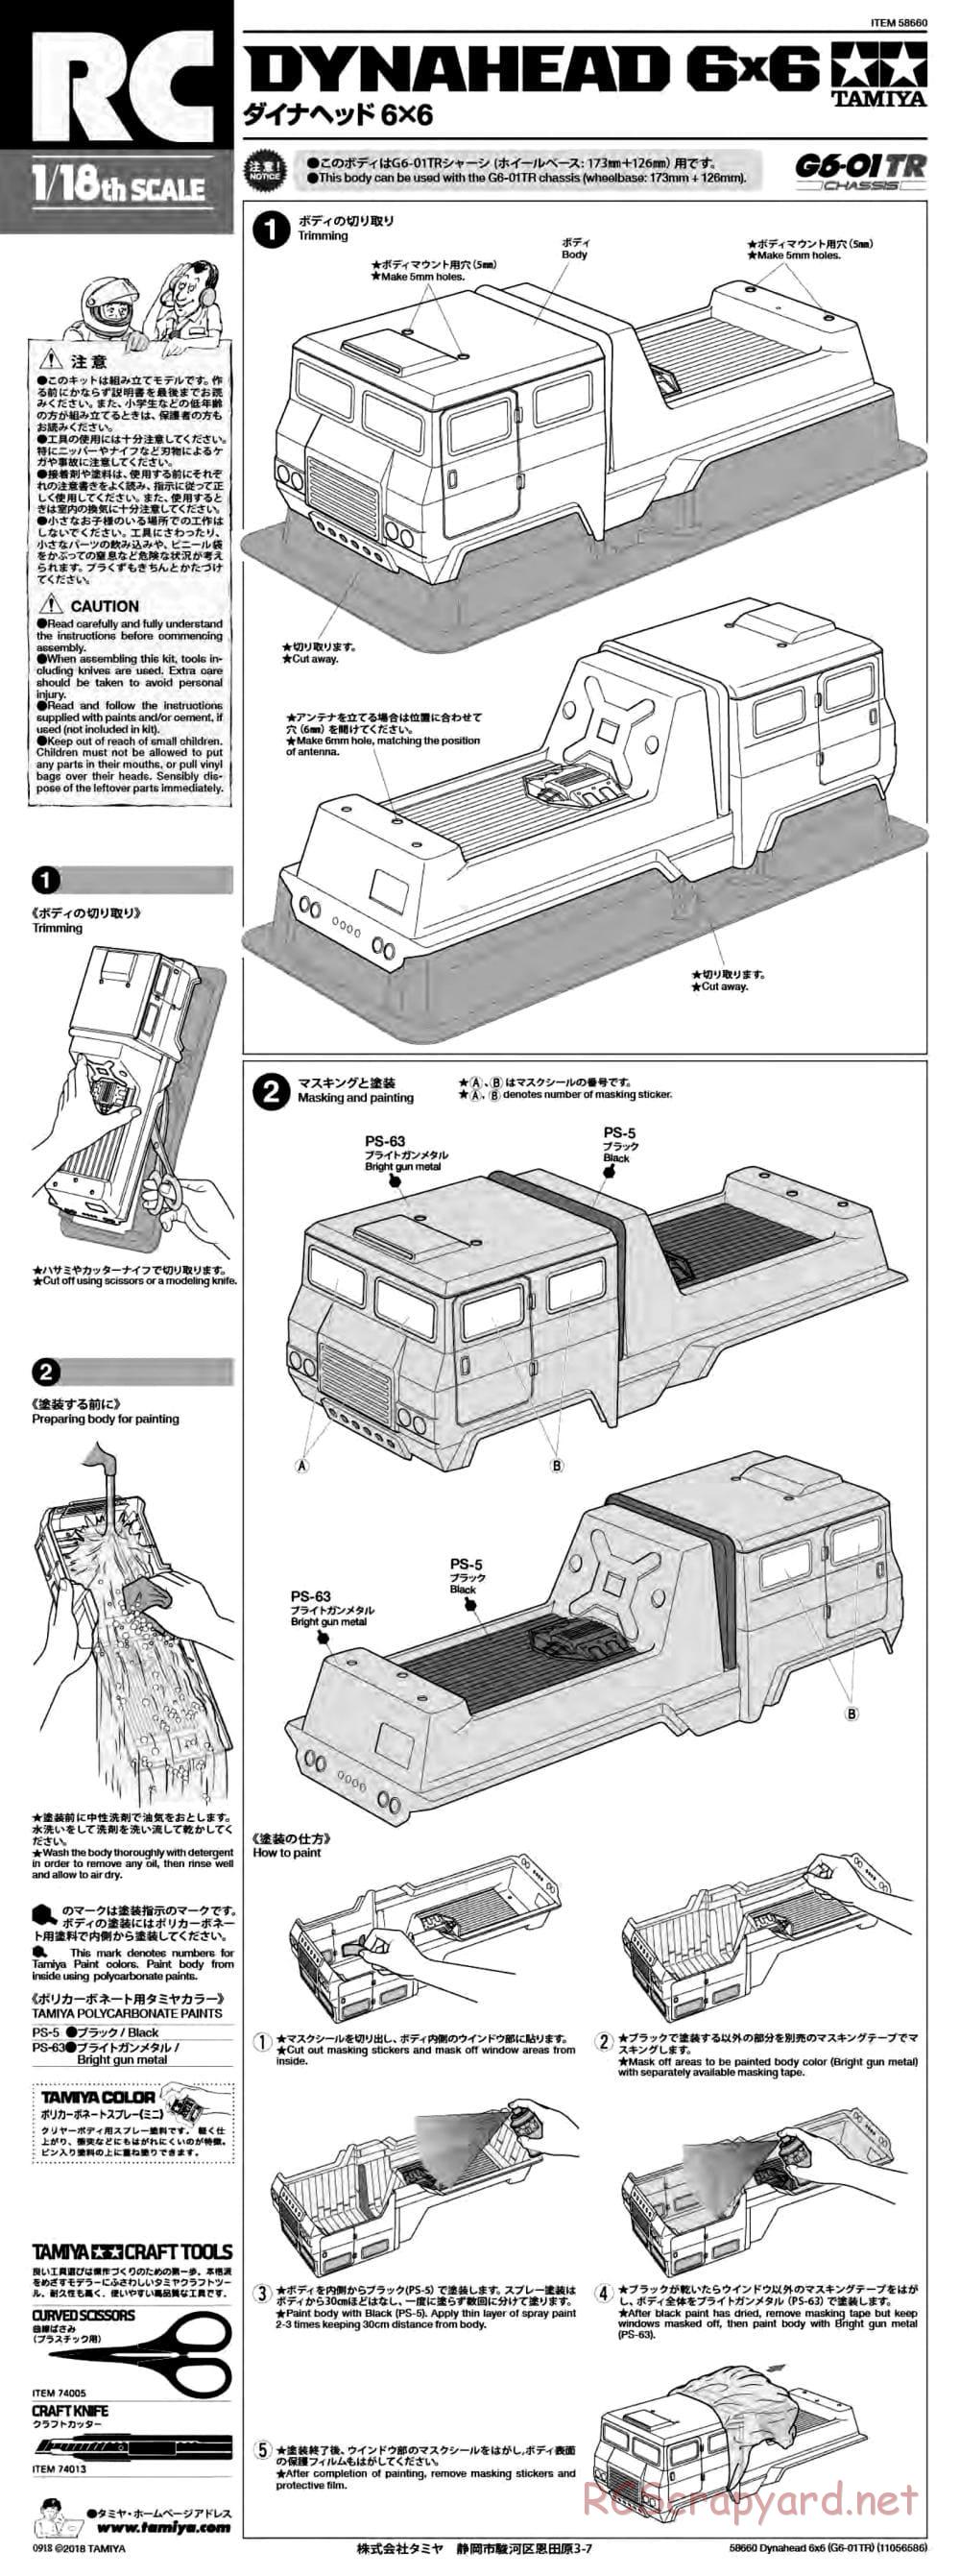 Tamiya - Dynahead 6x6 - G6-01TR Chassis - Manual - Page 1